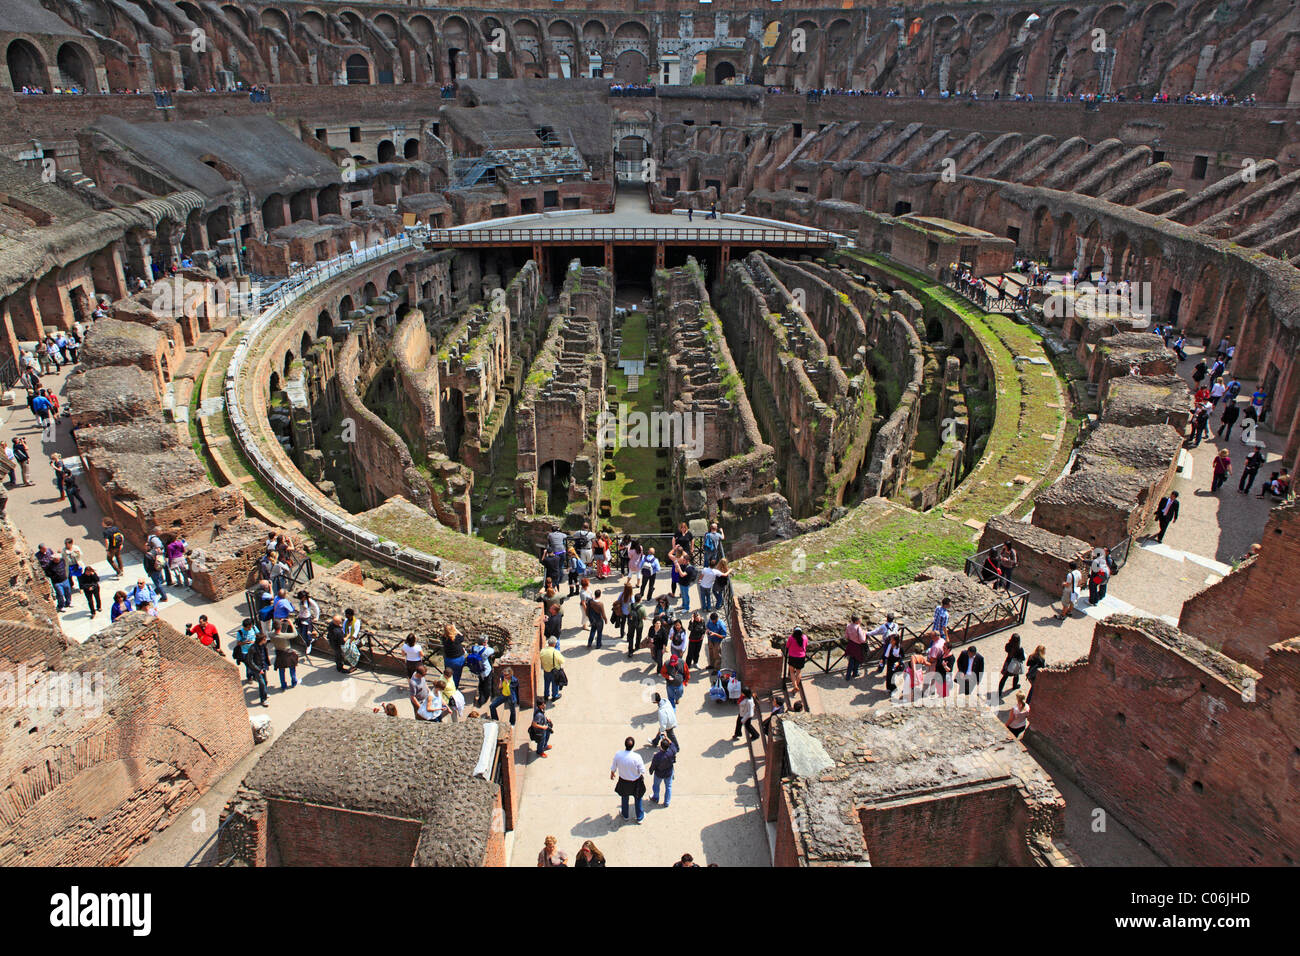 Colosseum, Rome, Italy, Europe Stock Photo